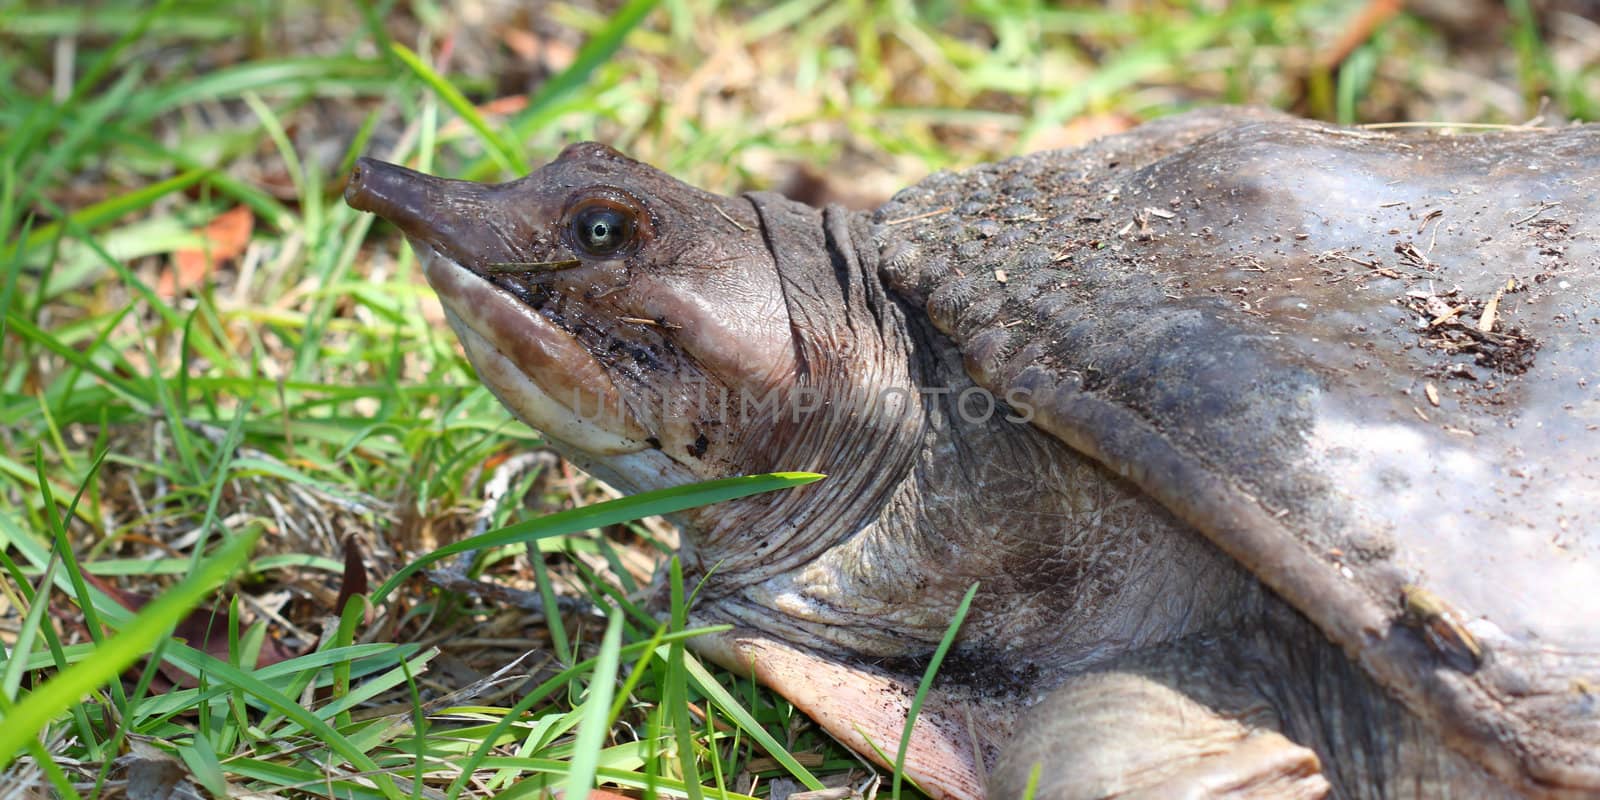 Florida Softshell Turtle (Apalone ferox) by Wirepec